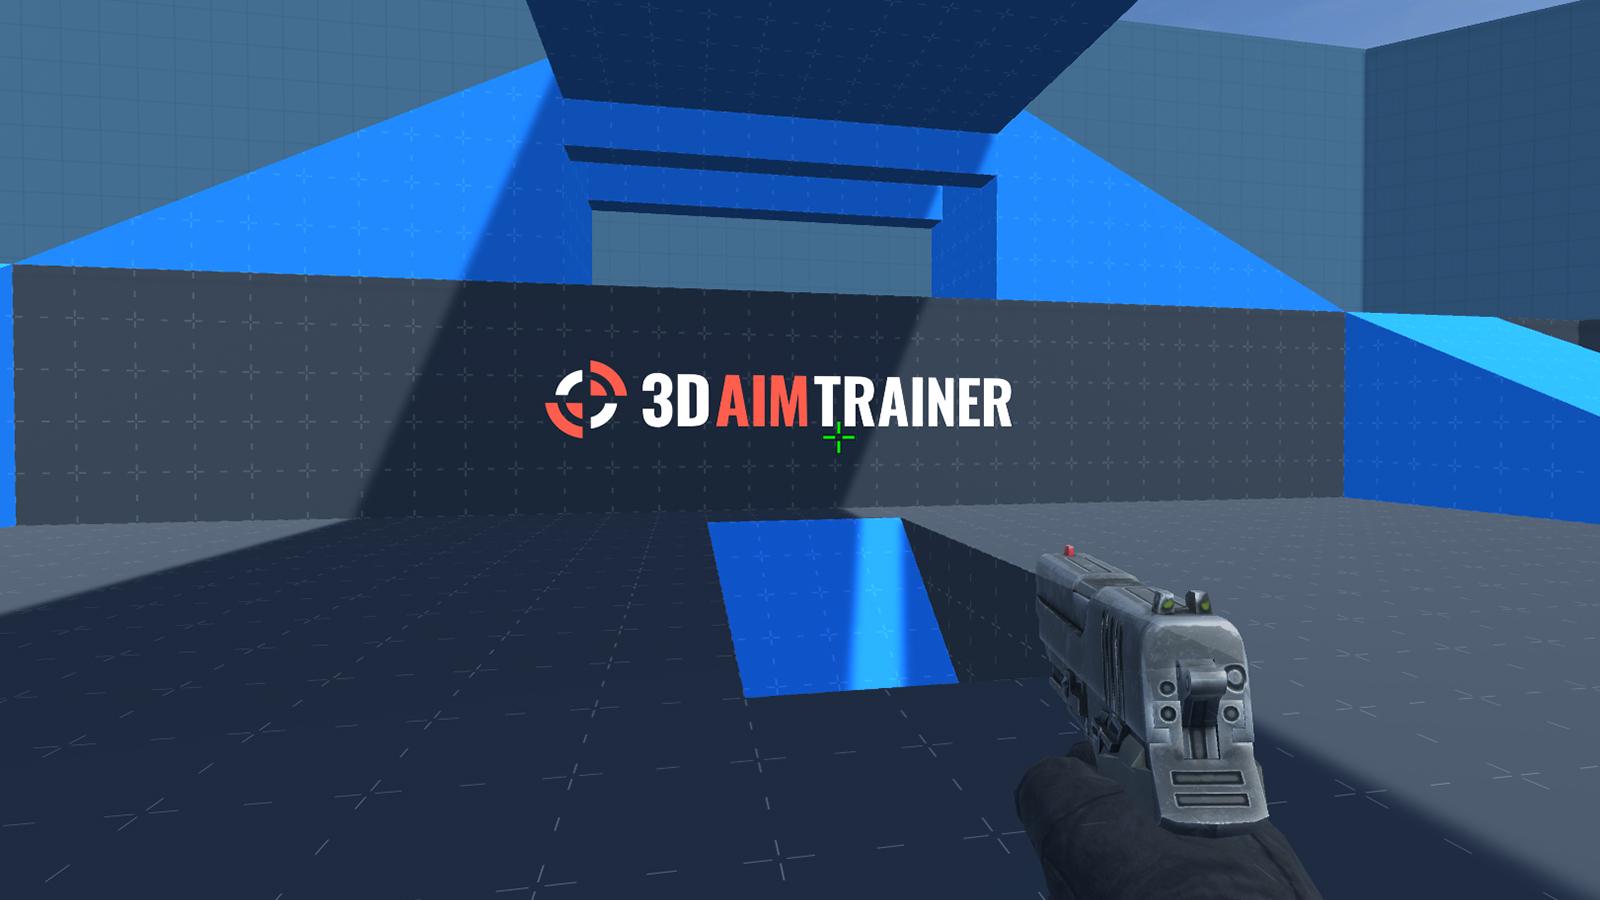 3D Aim Trainer on Steam